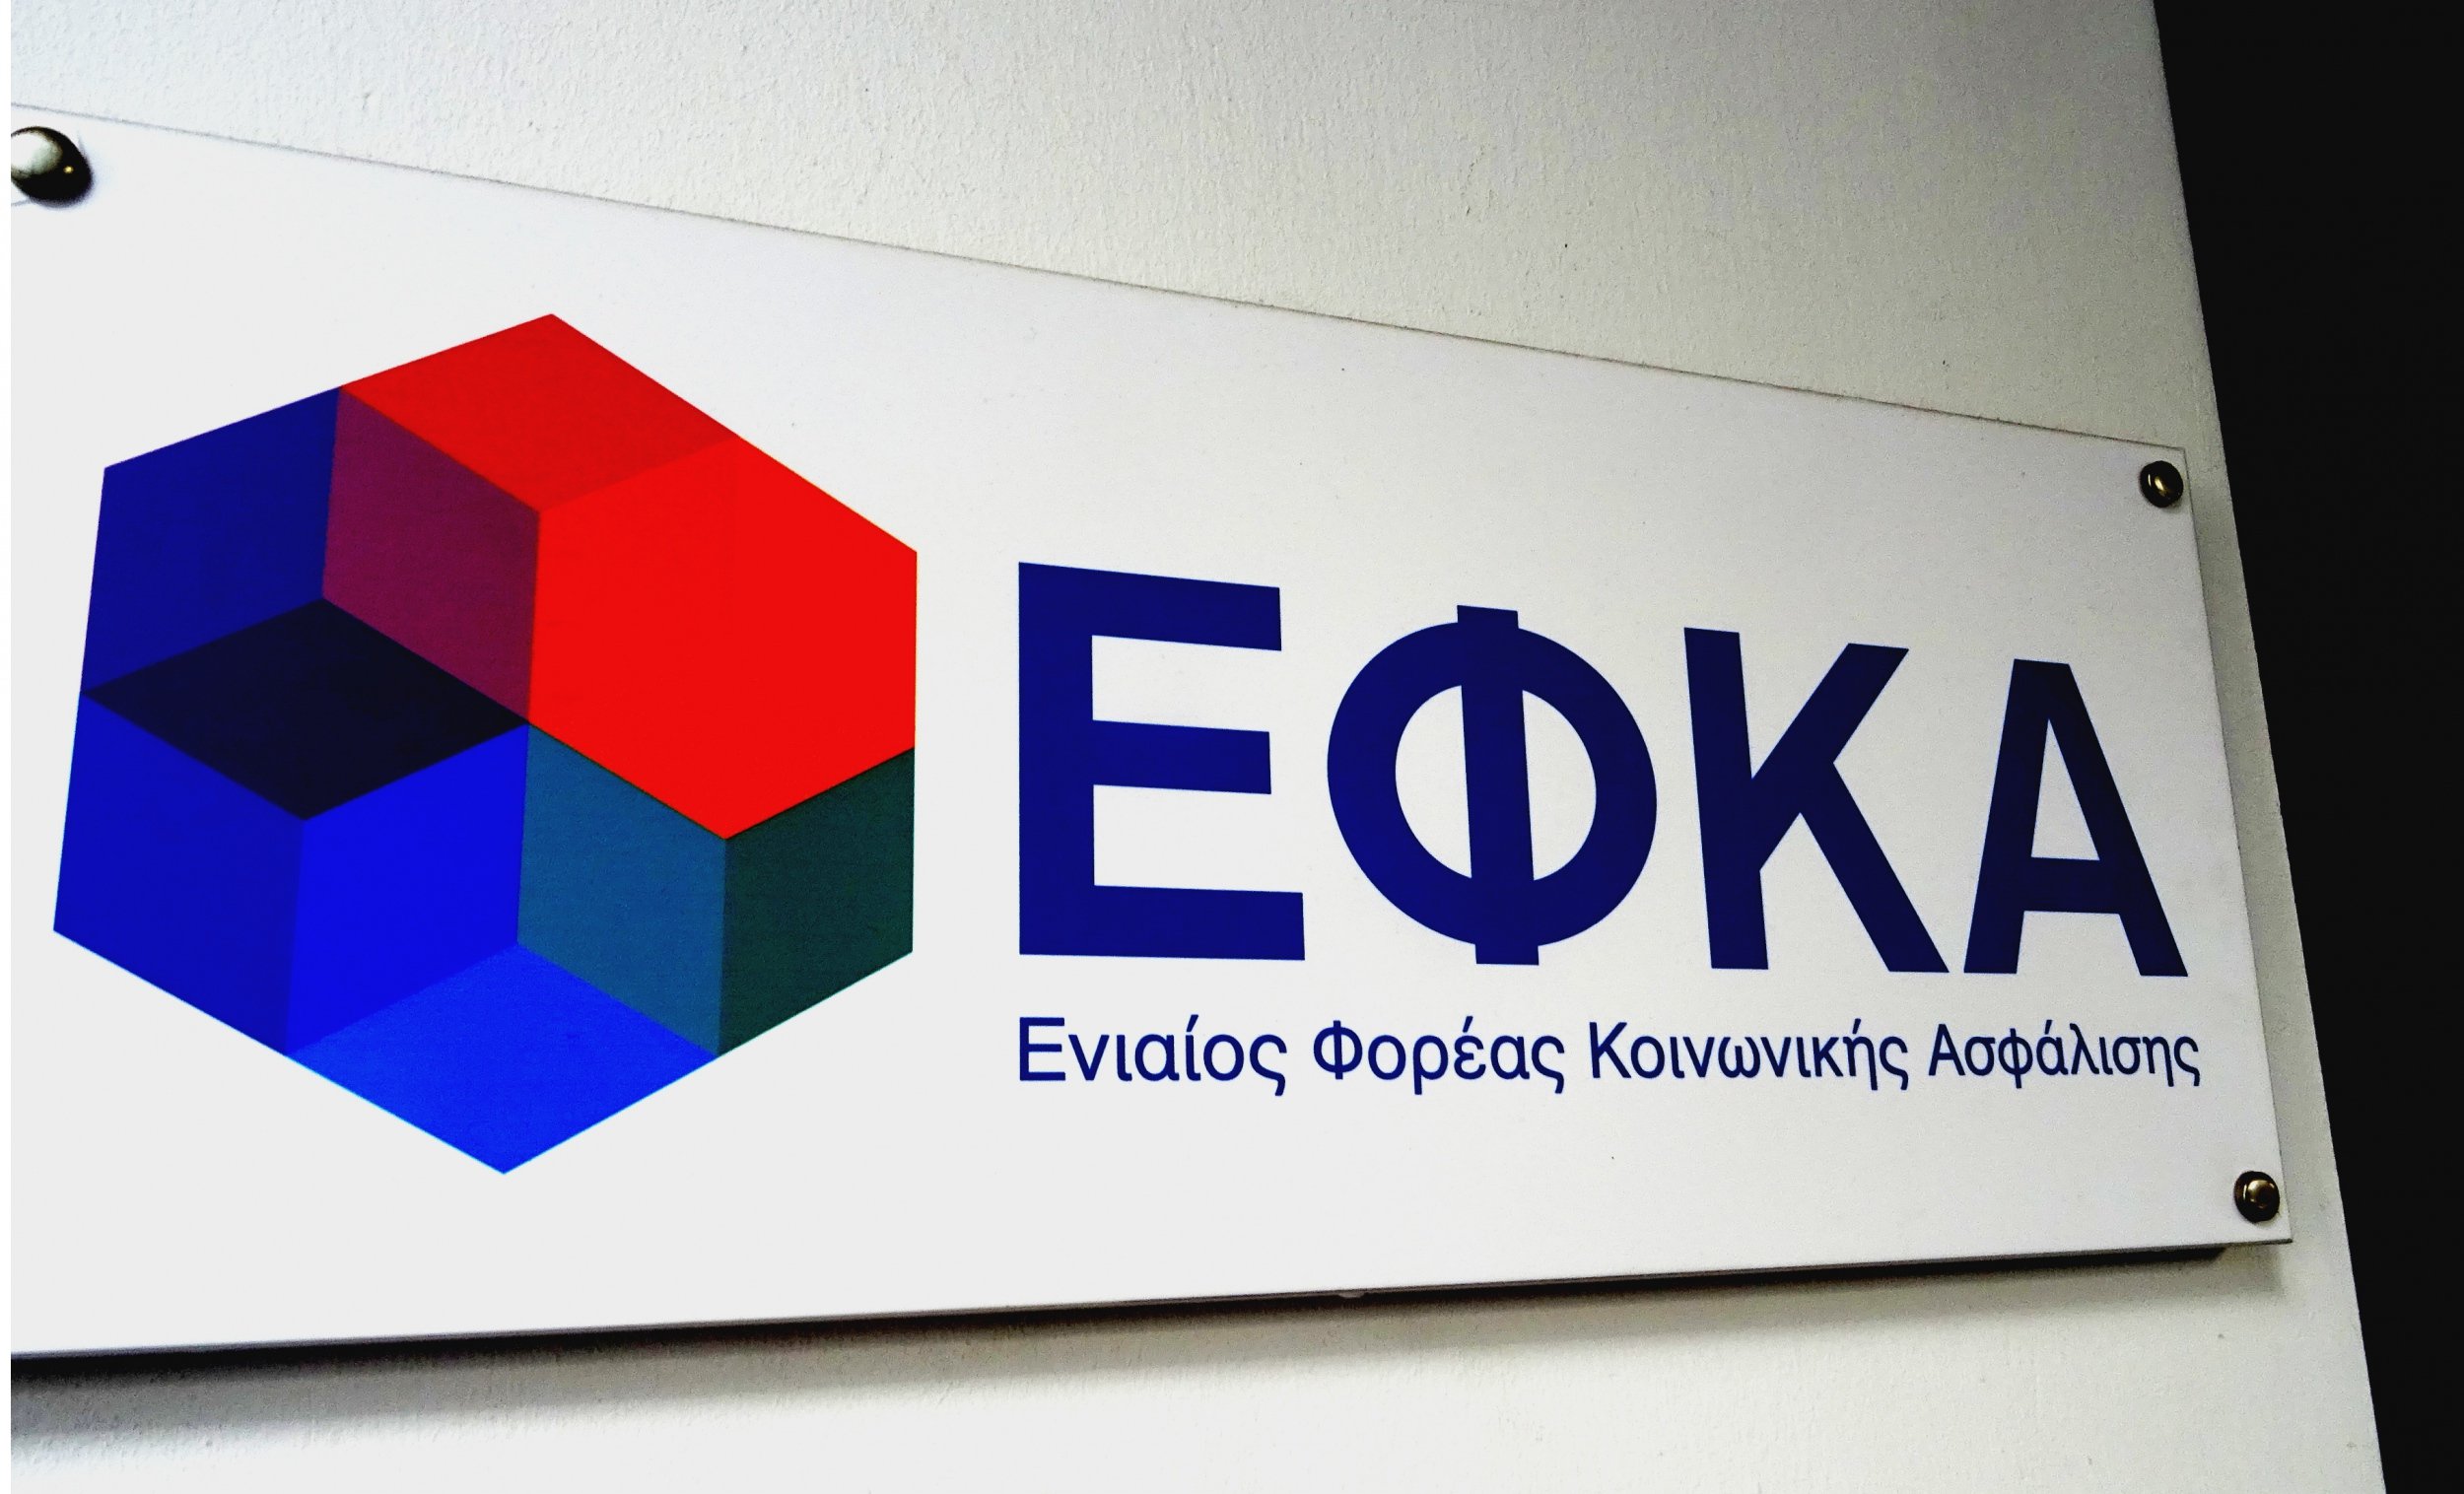 More information about "Αναρτώνται τα νέα εκκαθαριστικά του ΕΦΚΑ για το 2017"